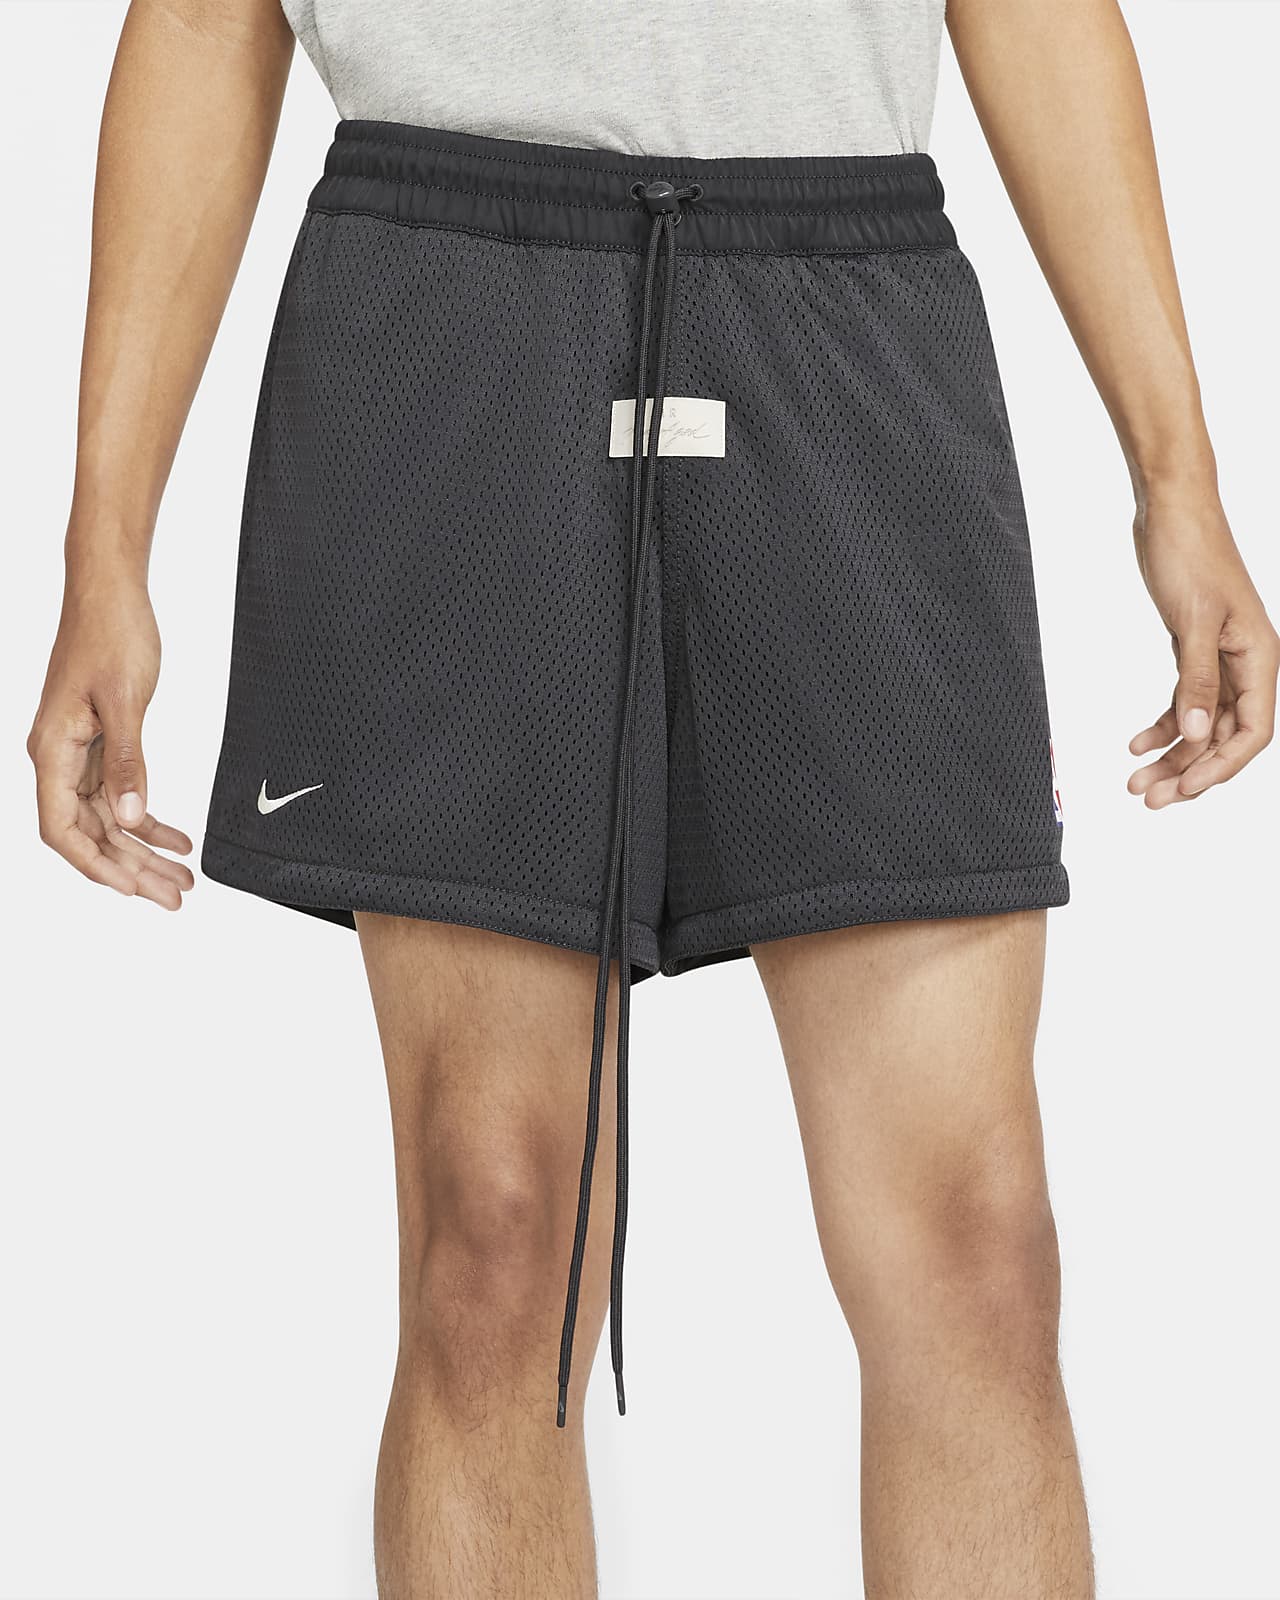 Nike x Fear of God x NBA Basketball Shorts FOG Sail/Cream Size XL